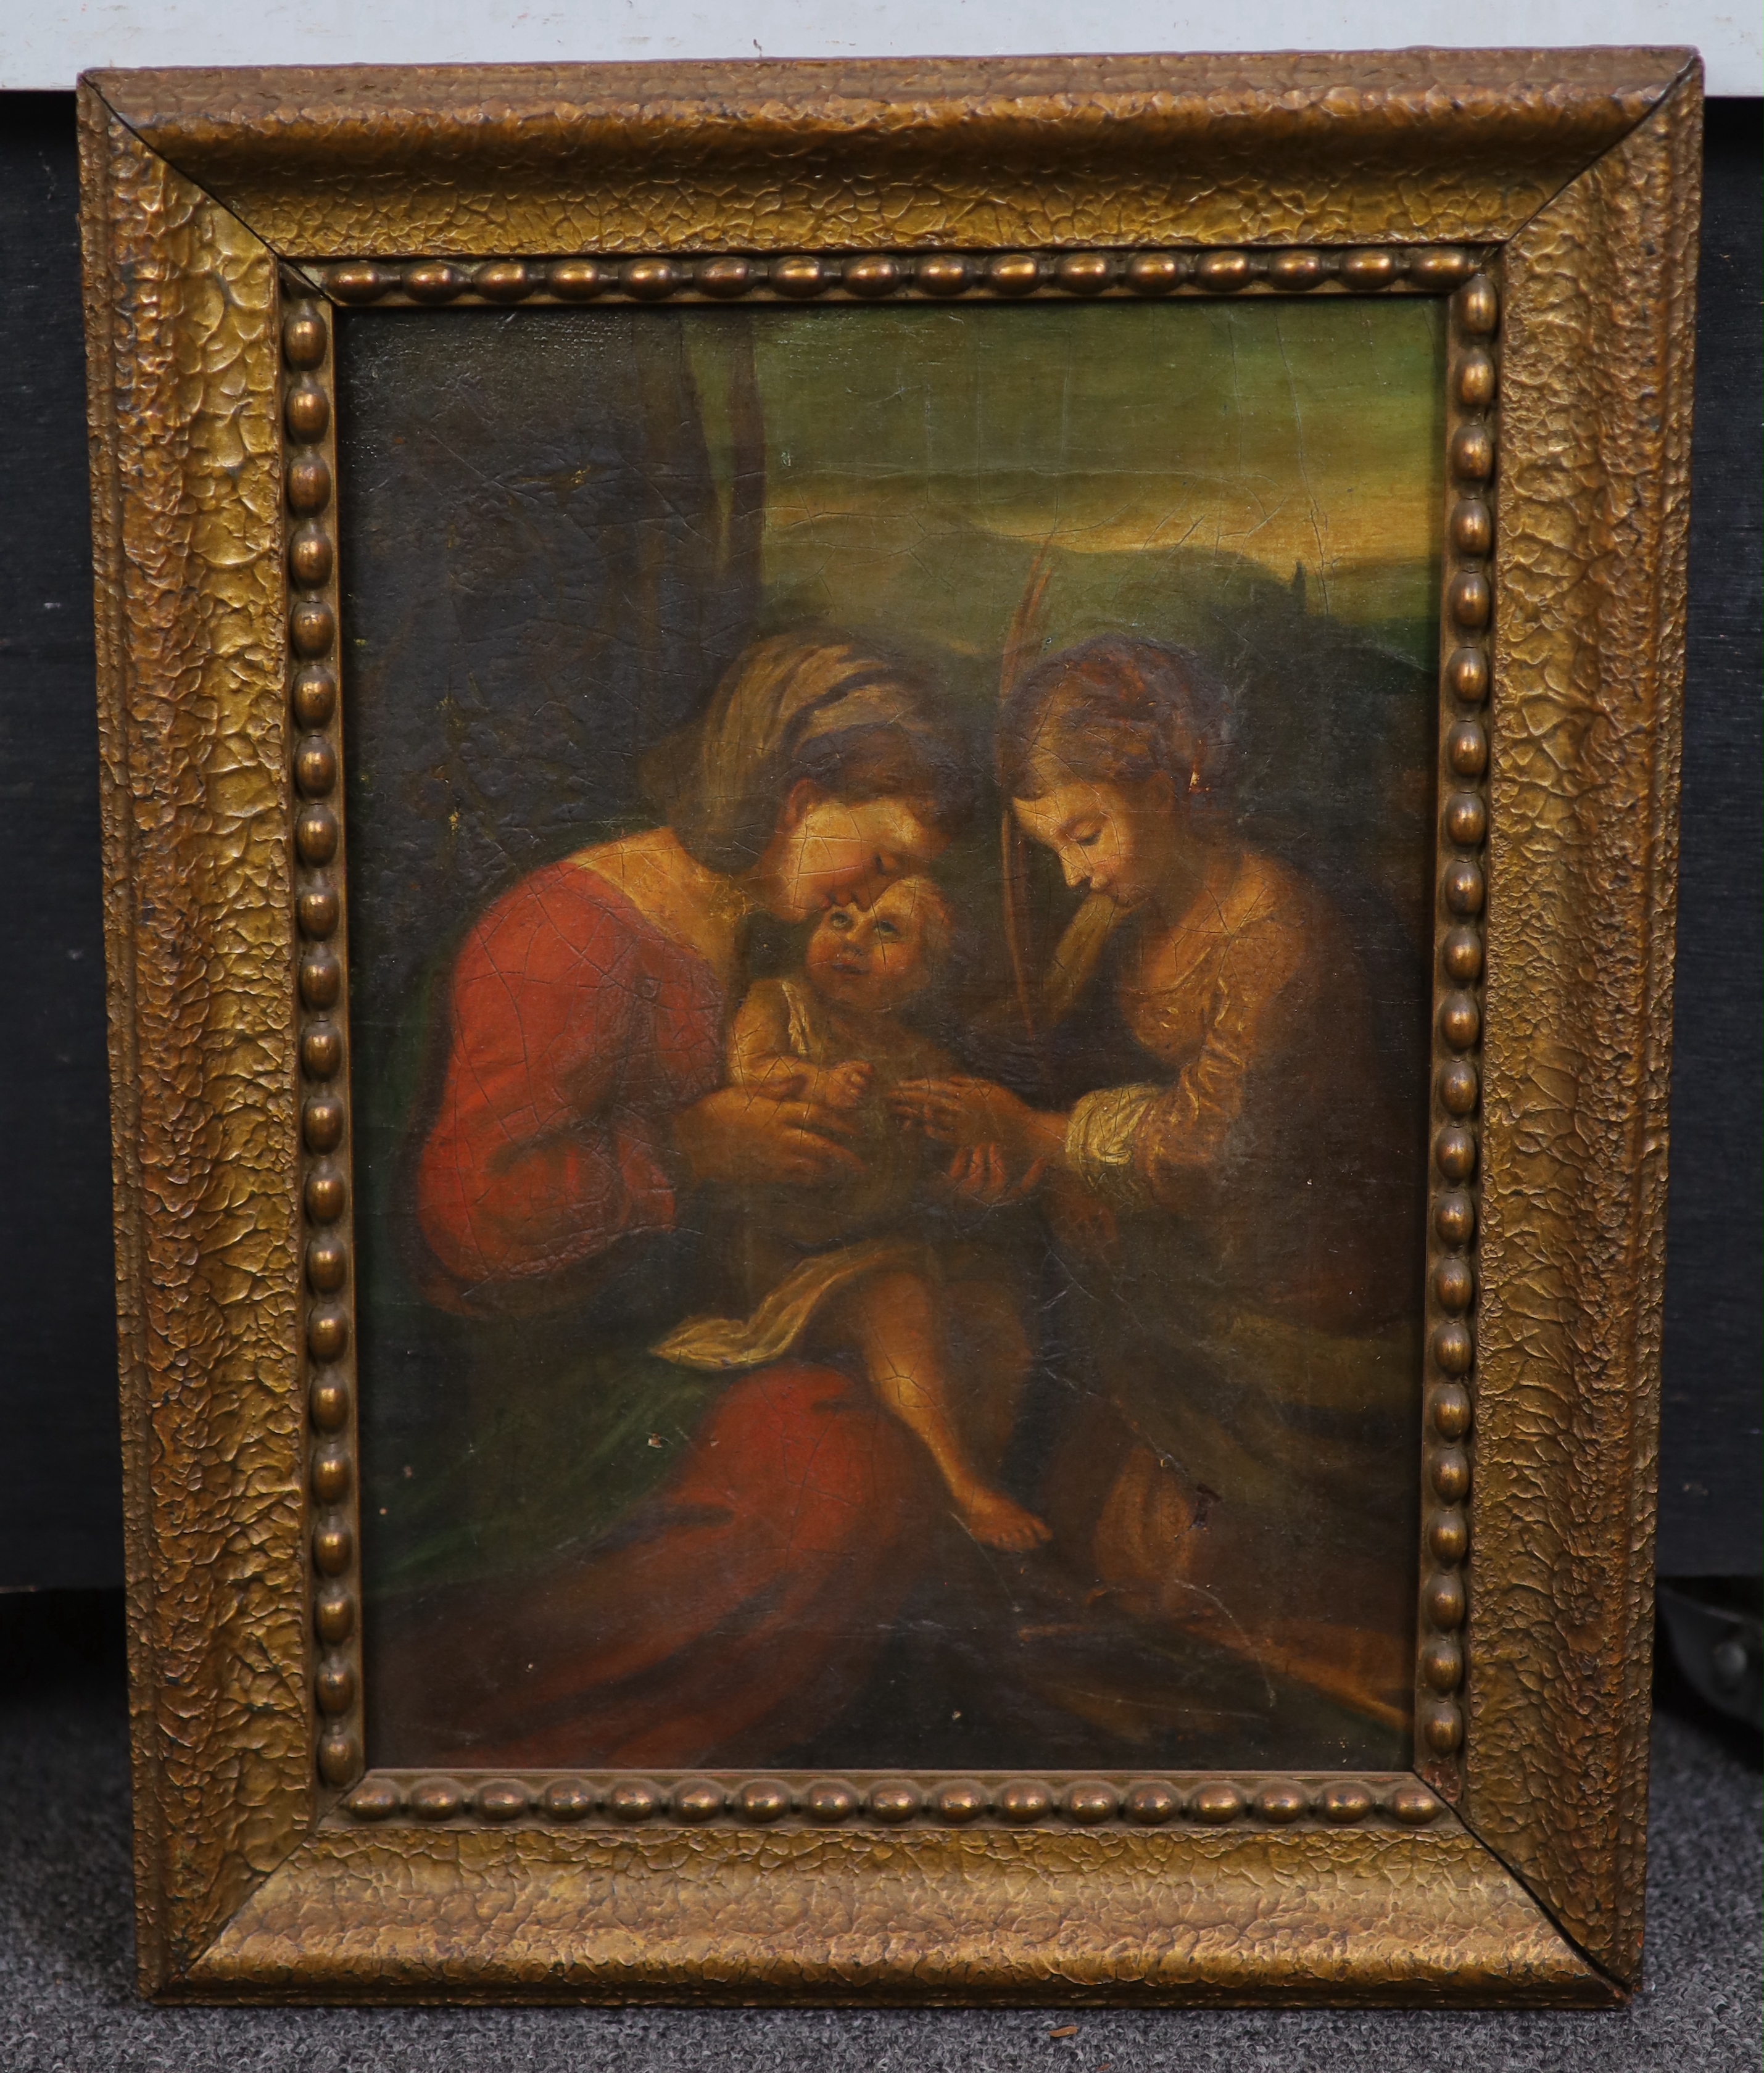 Late 18th / early 19th century, Italian School, oil on canvas, Holy Family, 29 x 20cm